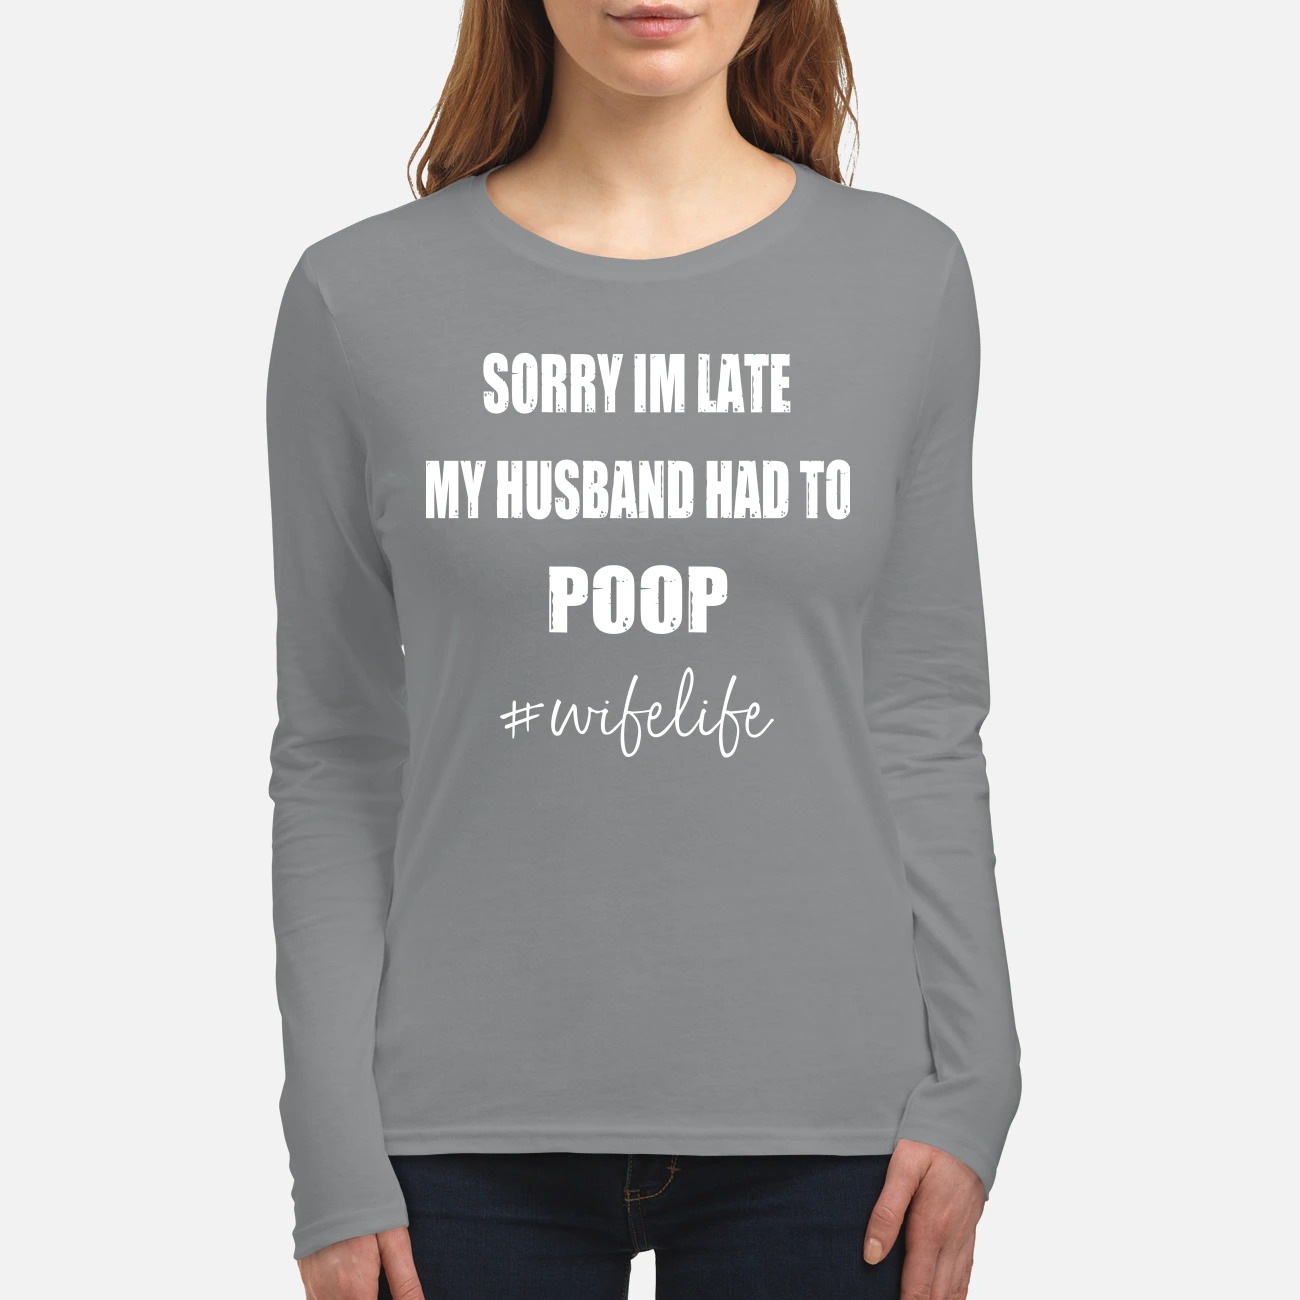 Sorry Im late my husband had to poop wifelife women's long sleeved shirt